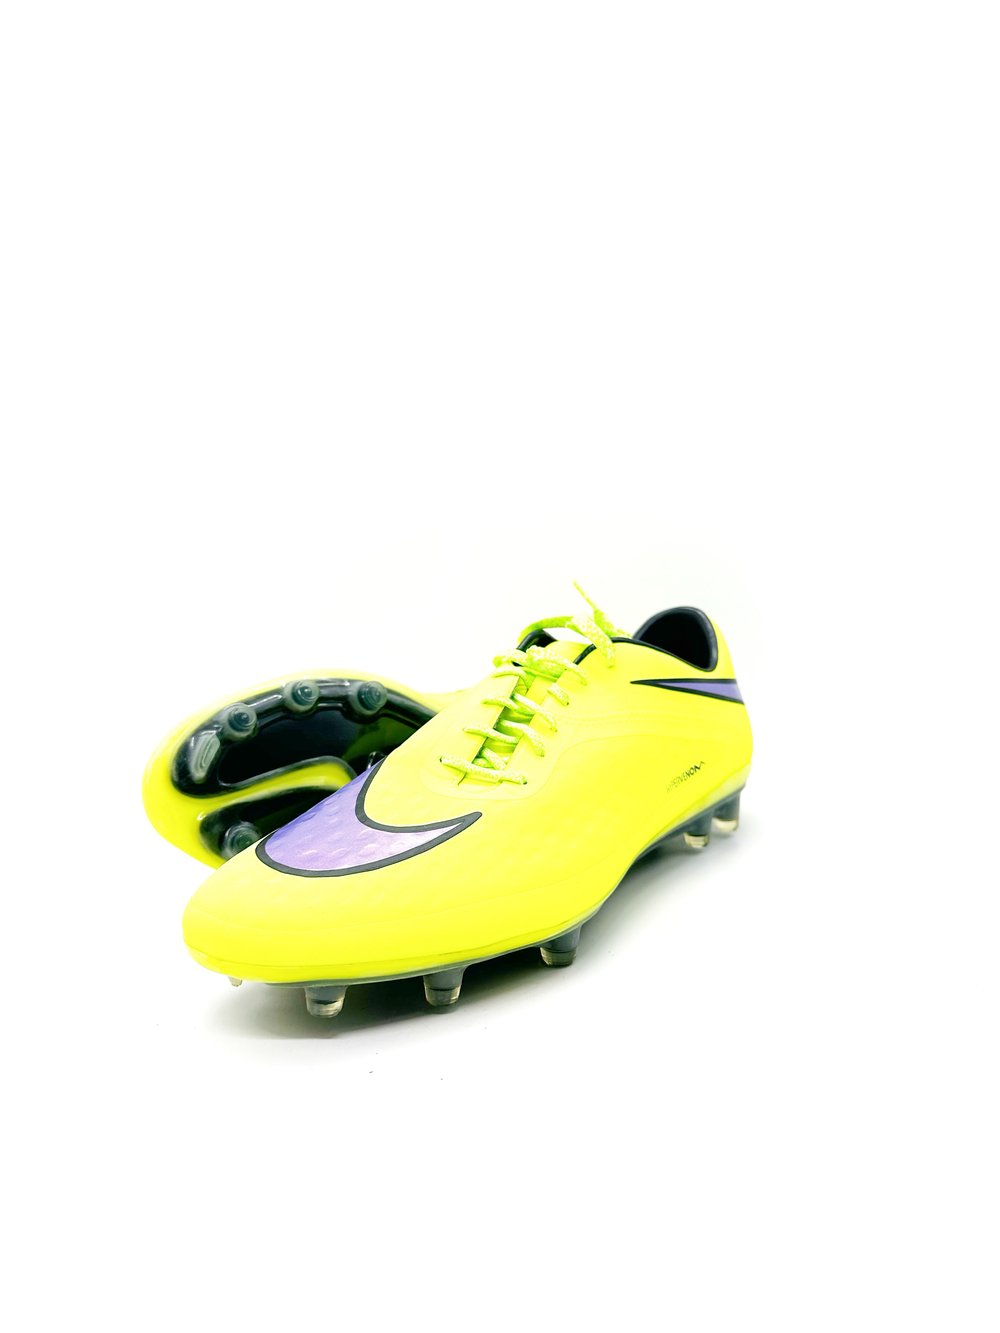 Image of Nike Hypervenom Phatal Yellow FG